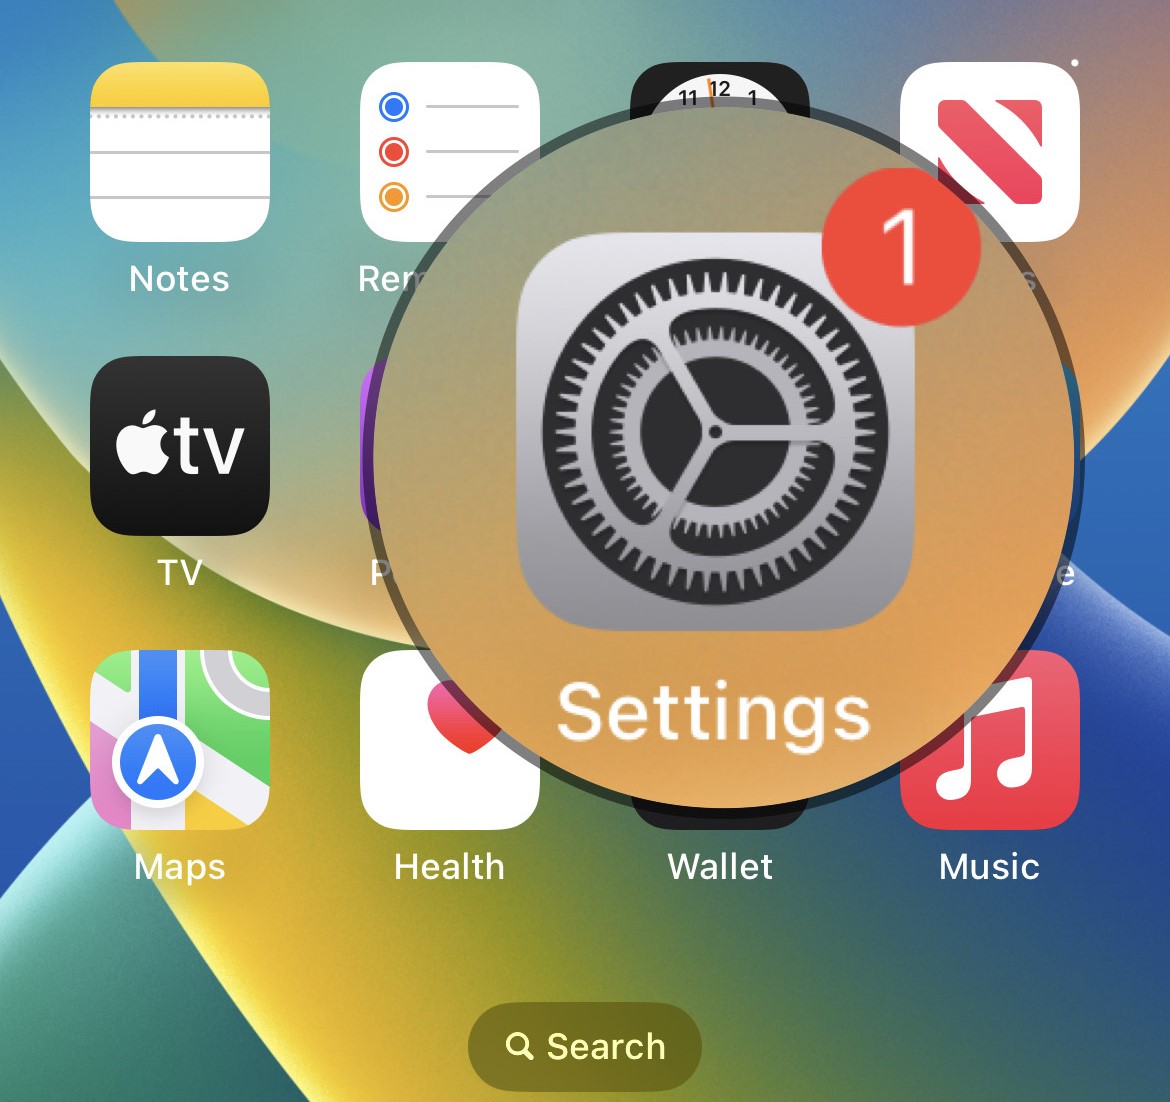 Iphone's settings